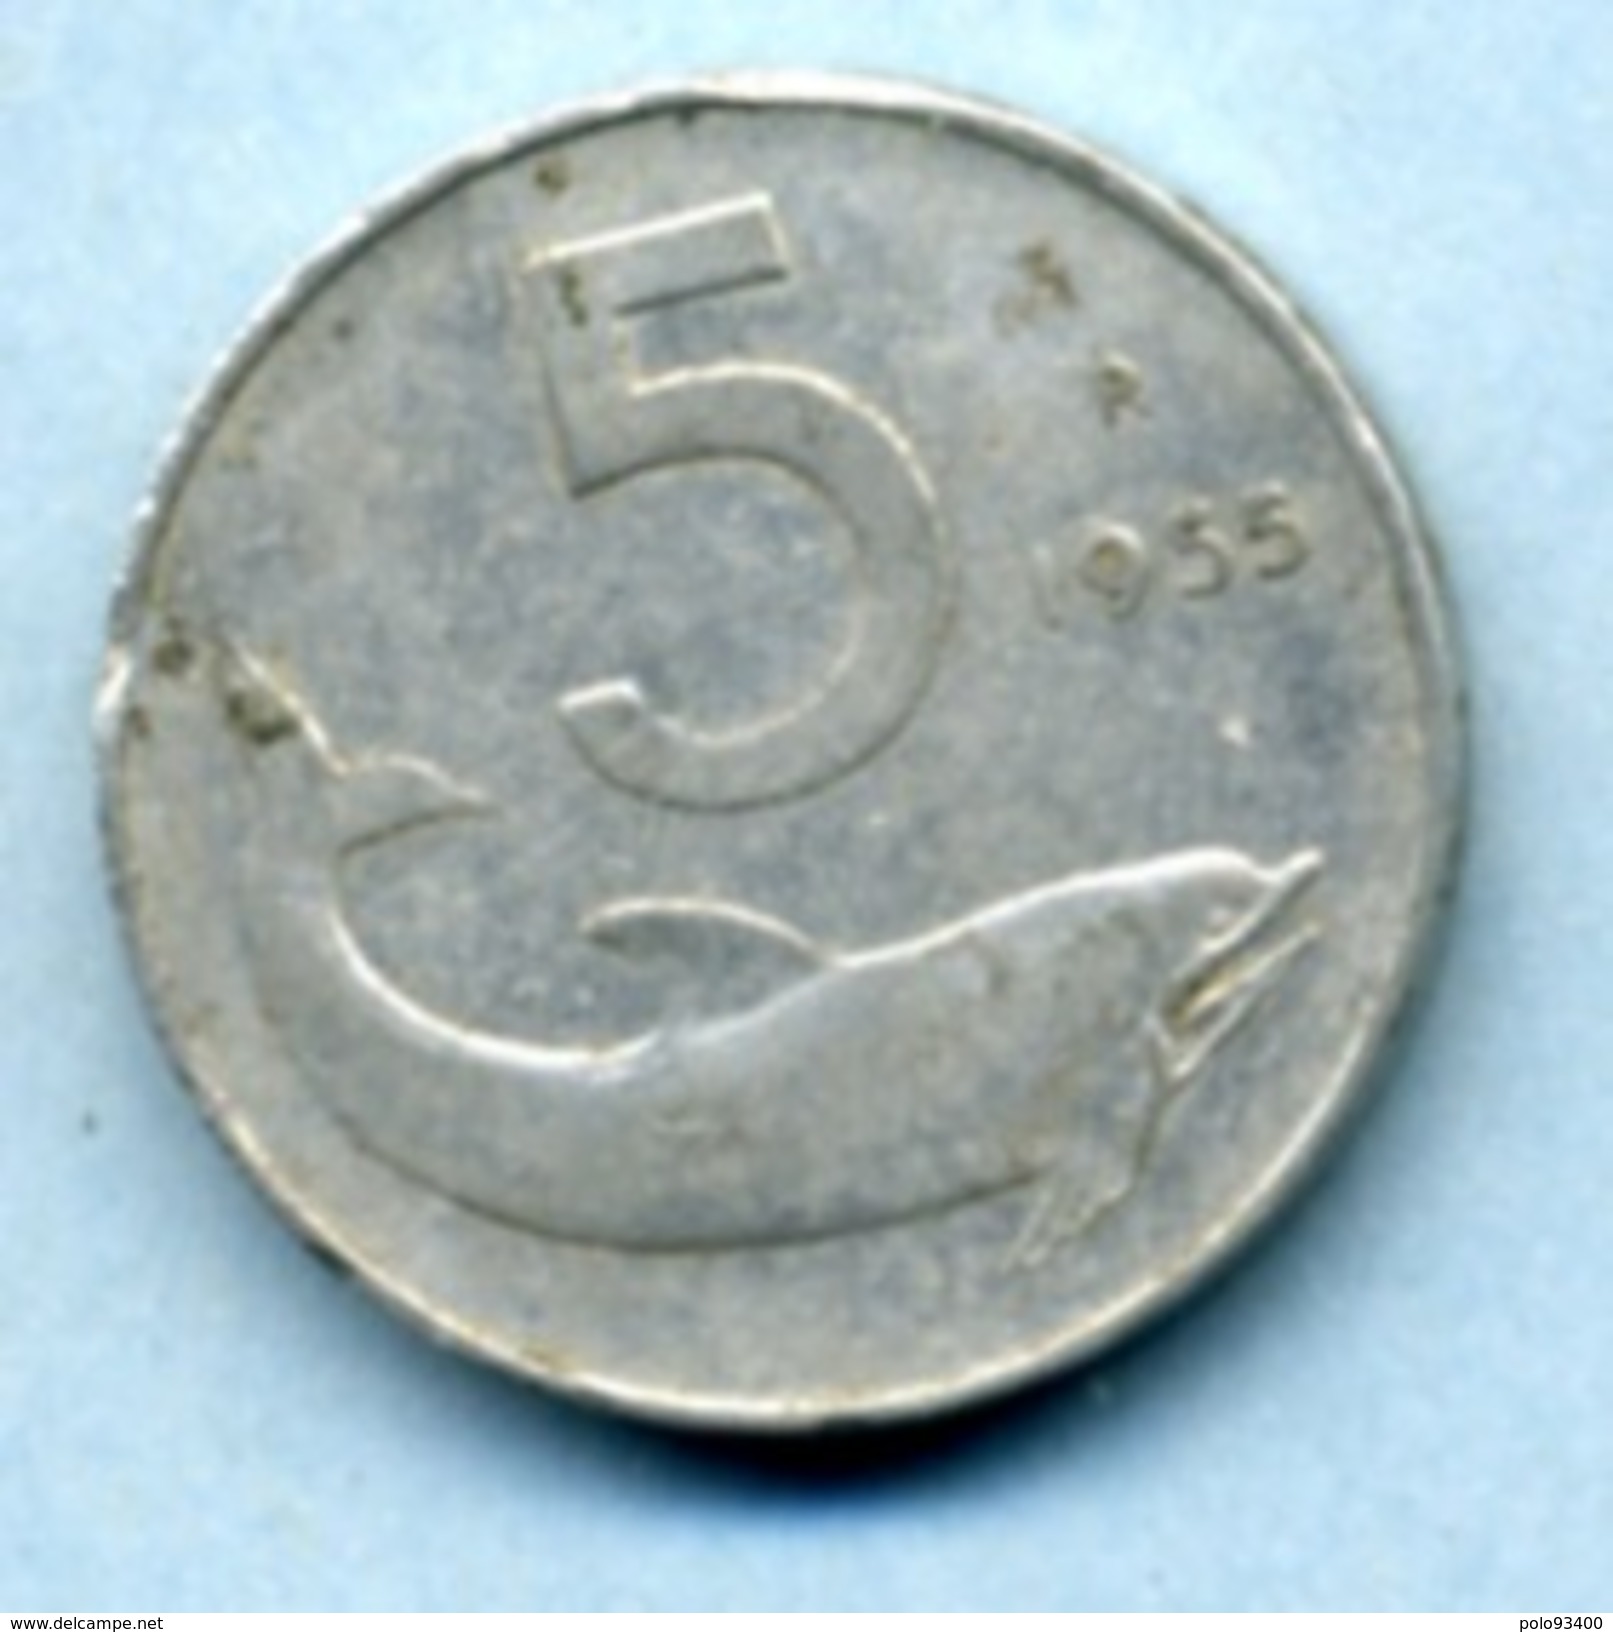 1955 5 LIRE - 5 Liras